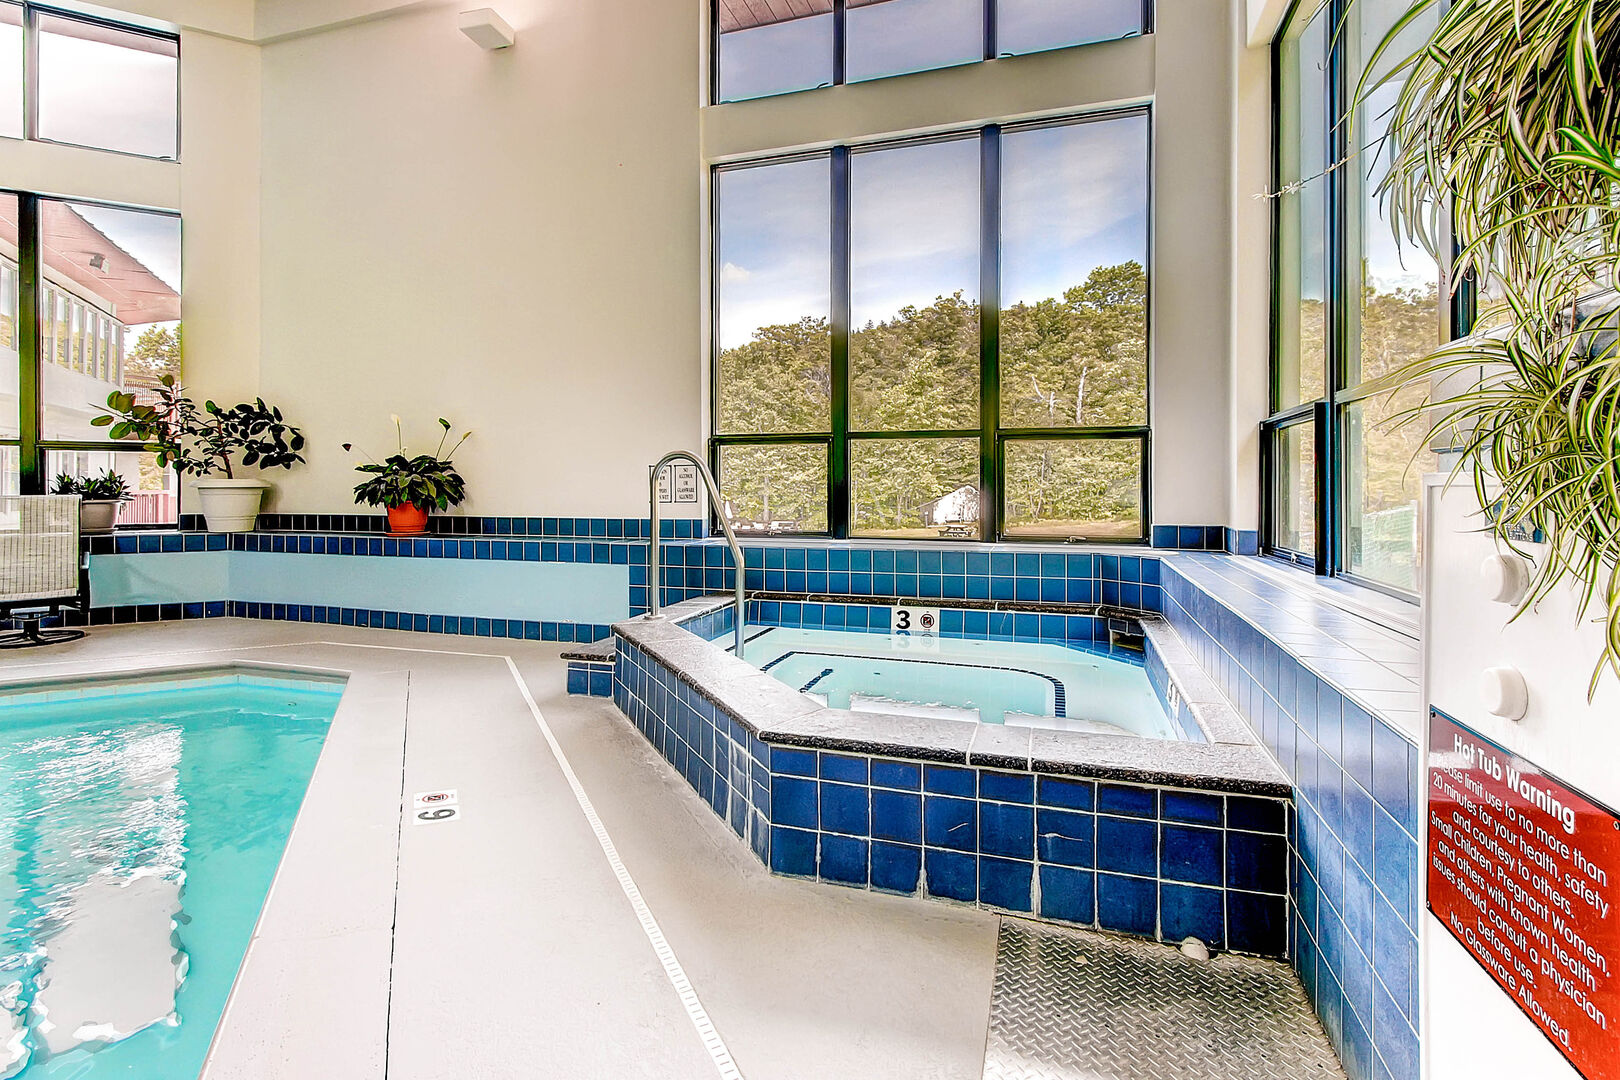 Sunrise Sport Center Communal outdoor indoor hot tub